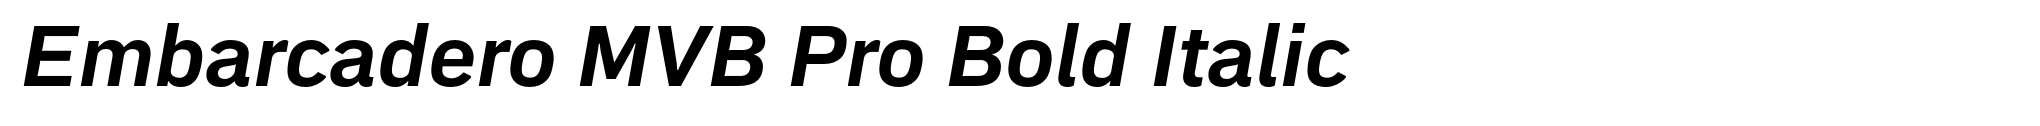 Embarcadero MVB Pro Bold Italic image